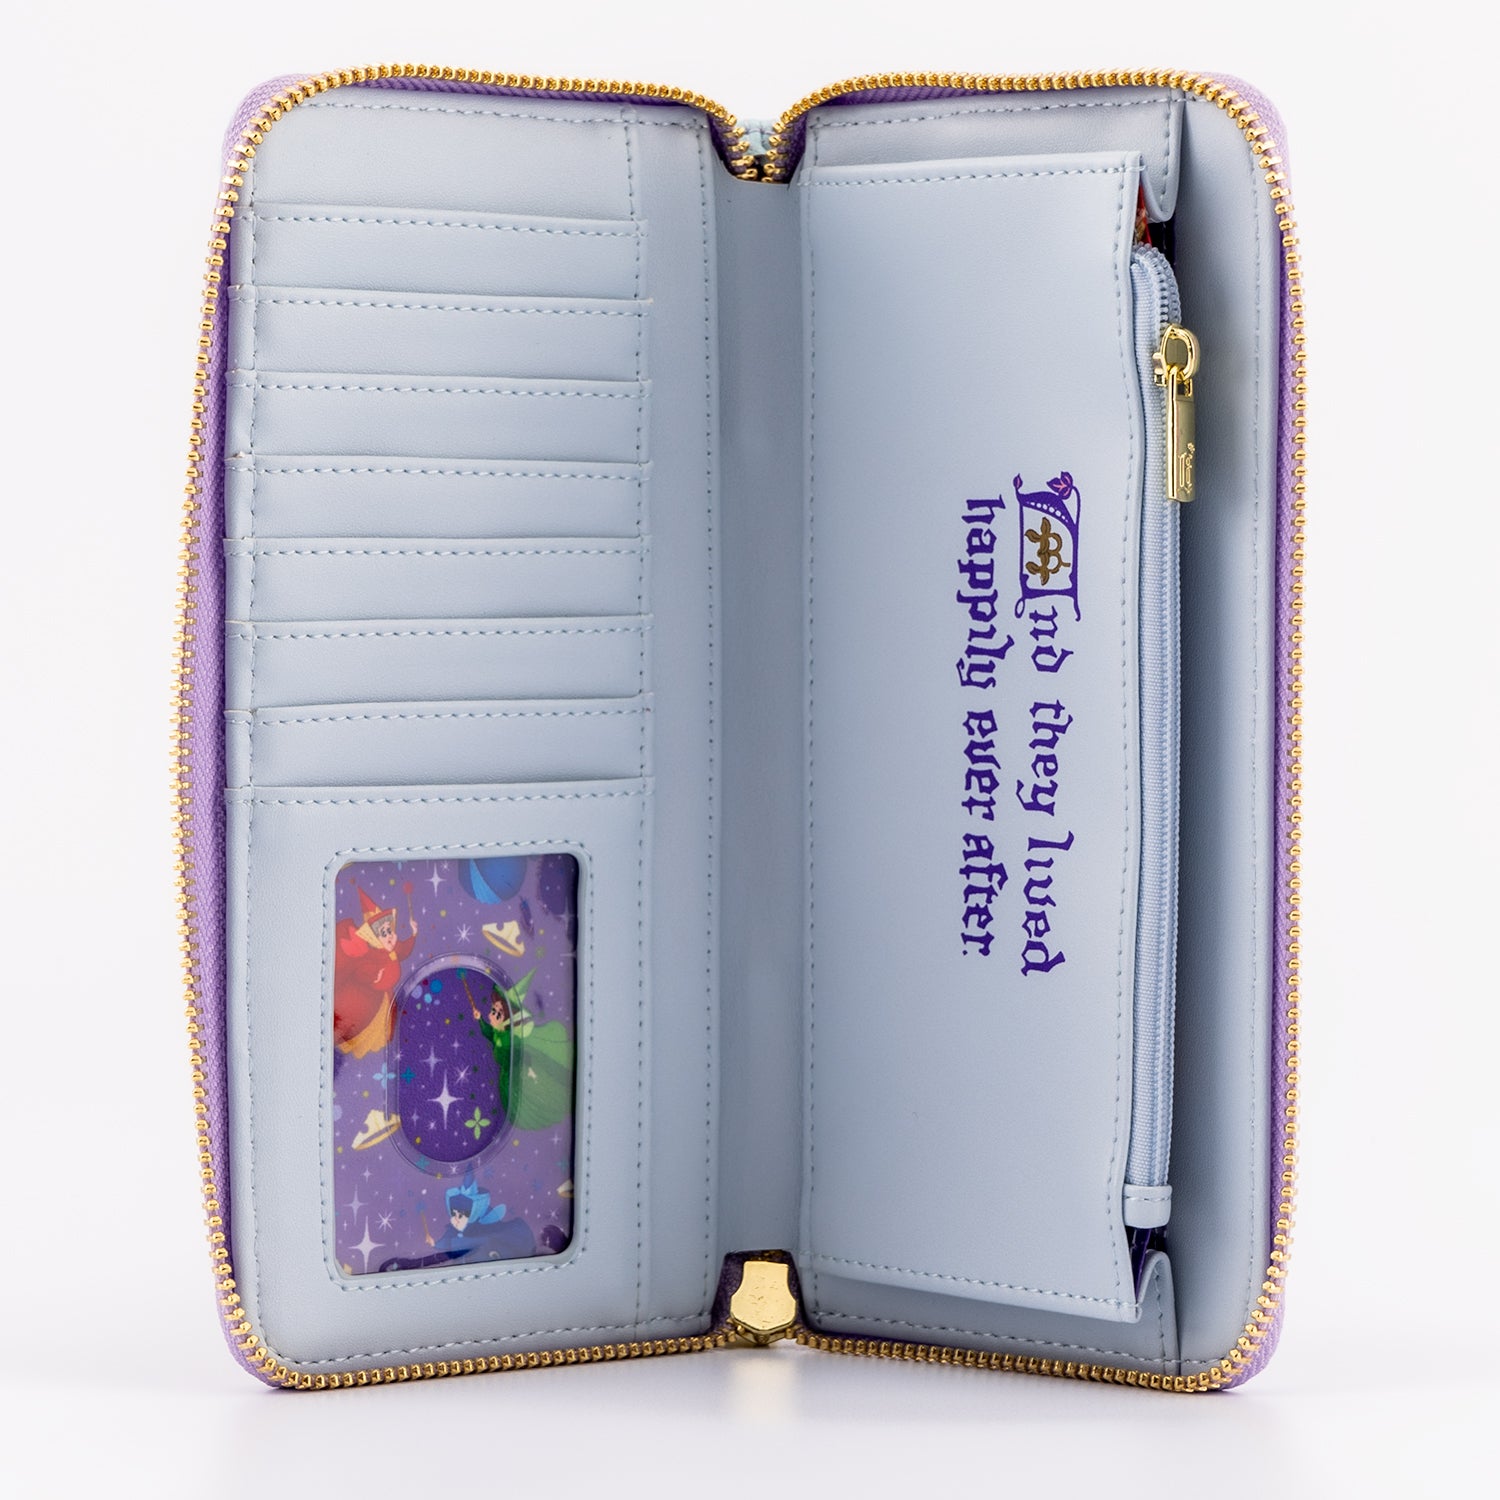 Loungefly Cinderella Castle Series Wallet